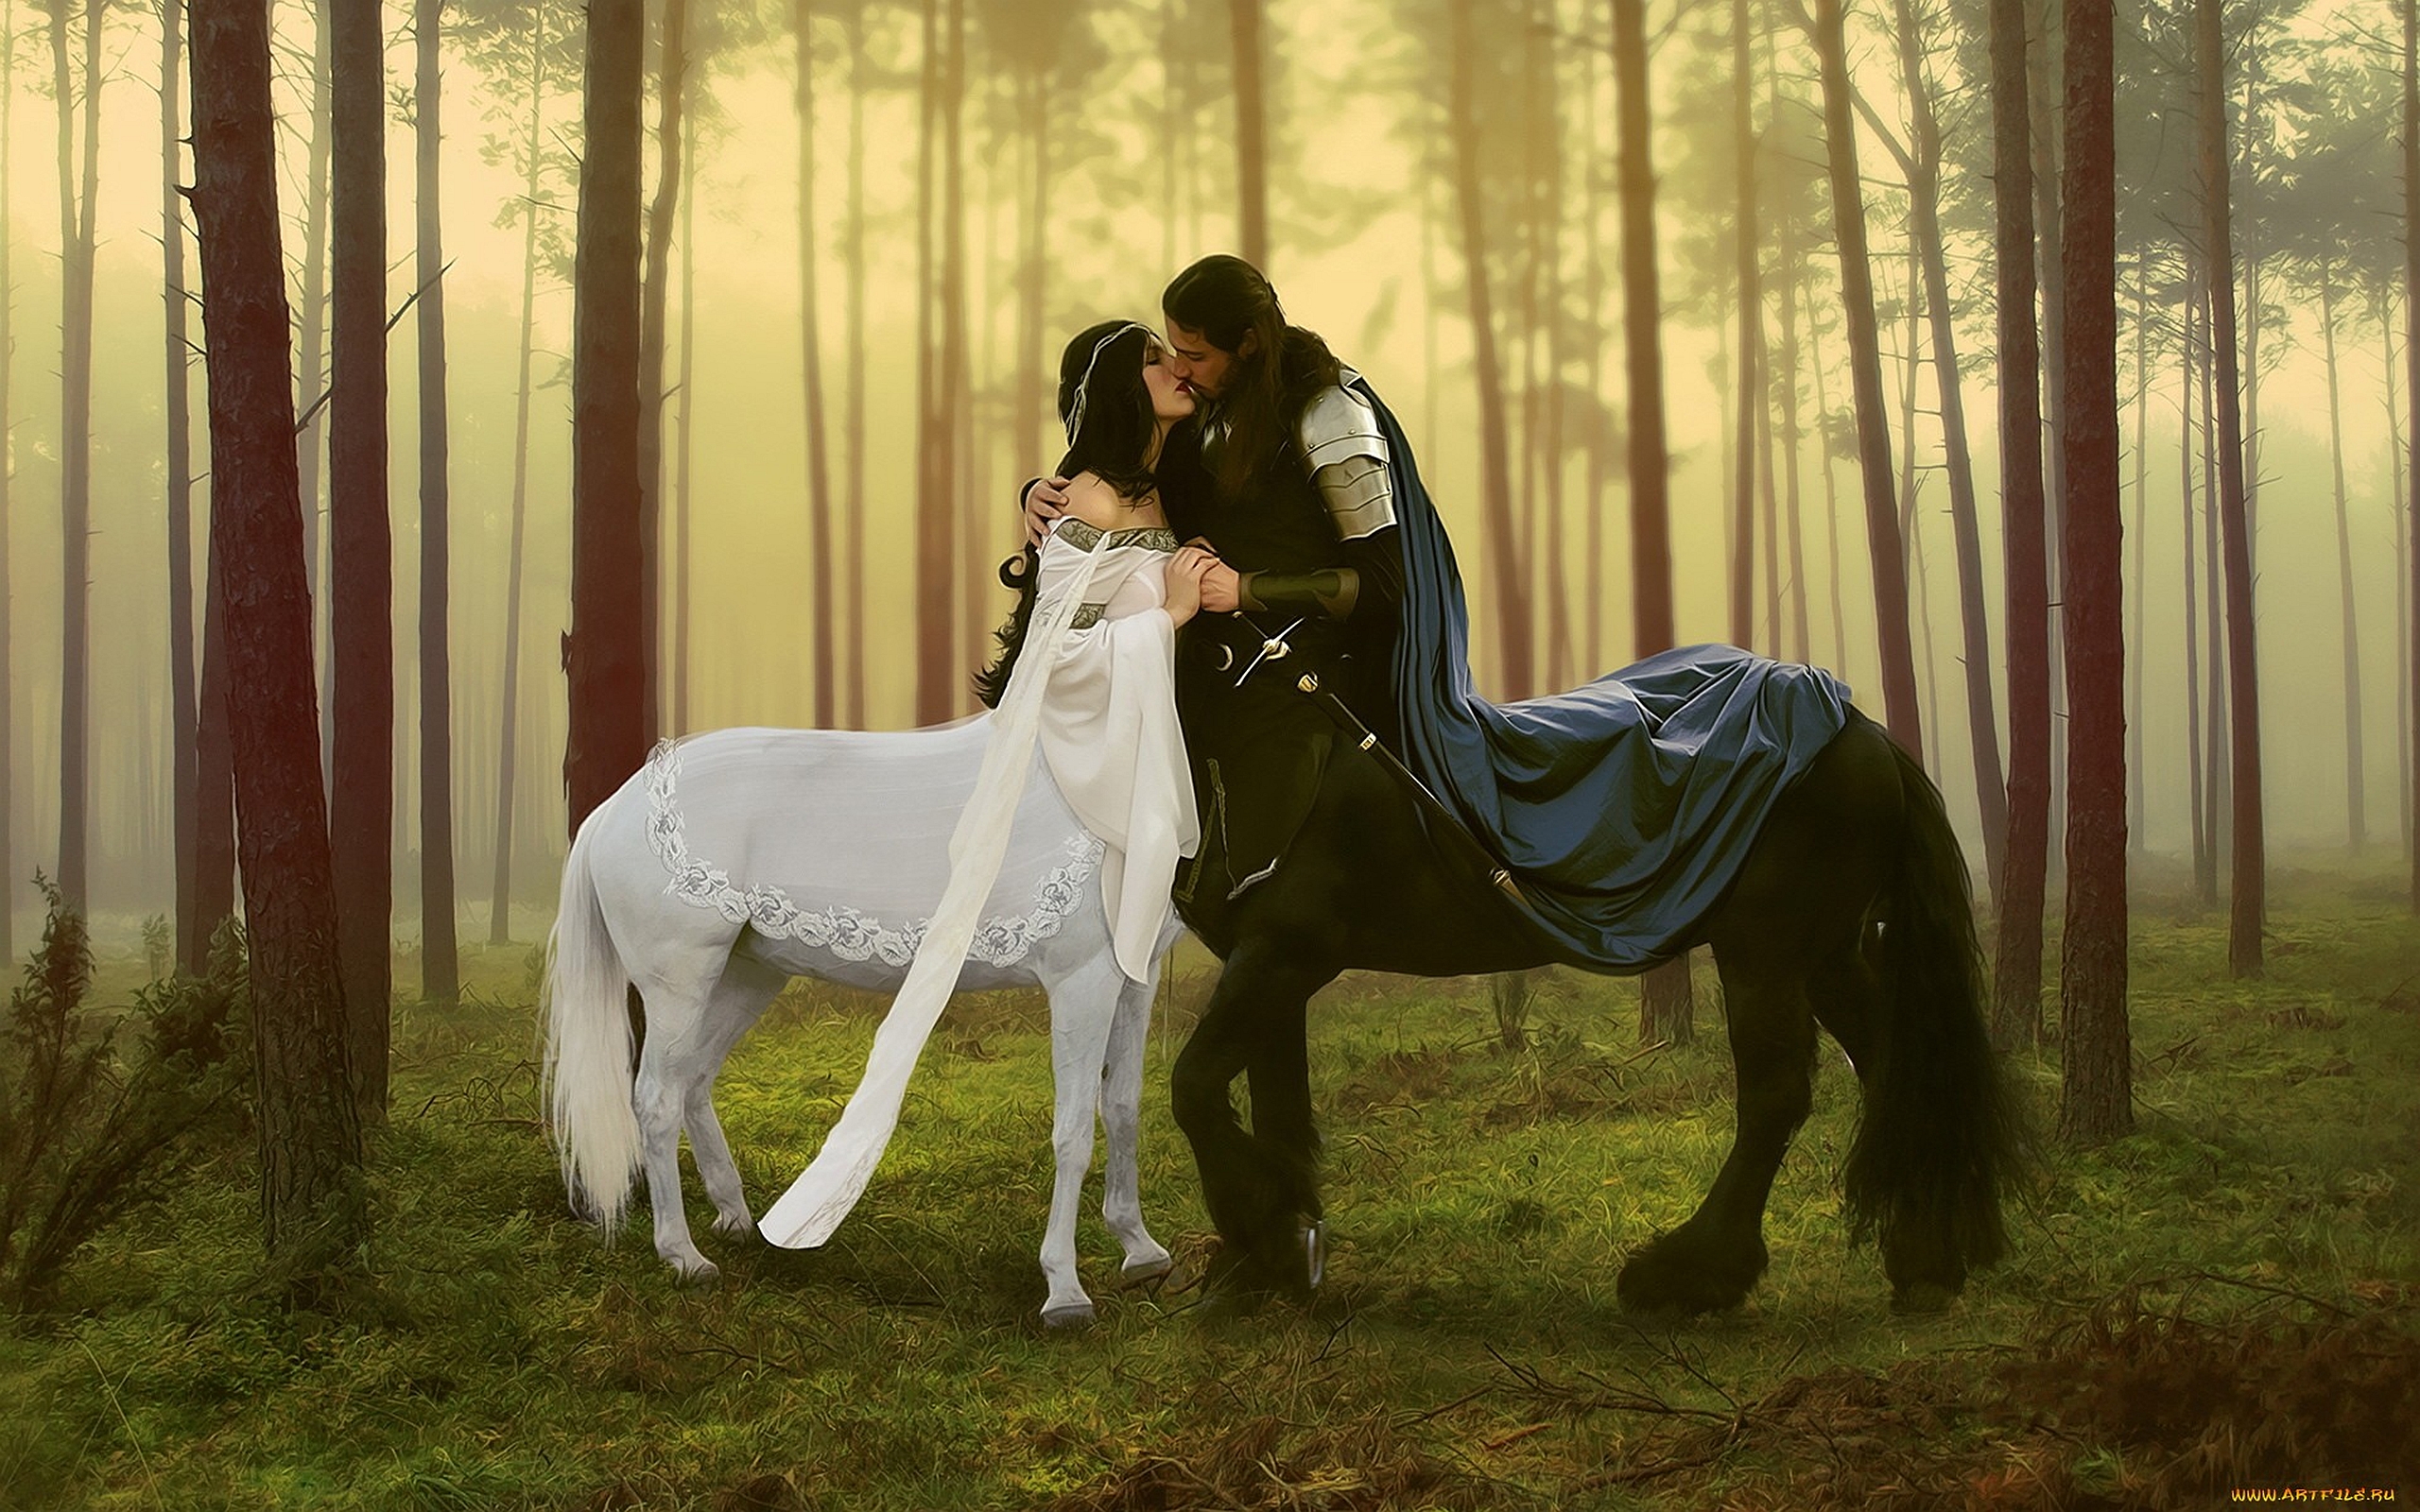 Конь мужик баб. Фотосессия с лошадьми. Фотосессия с лошадью в платье. Фотосессии в стиле фэнтези. Мужчина и женщина на коне.